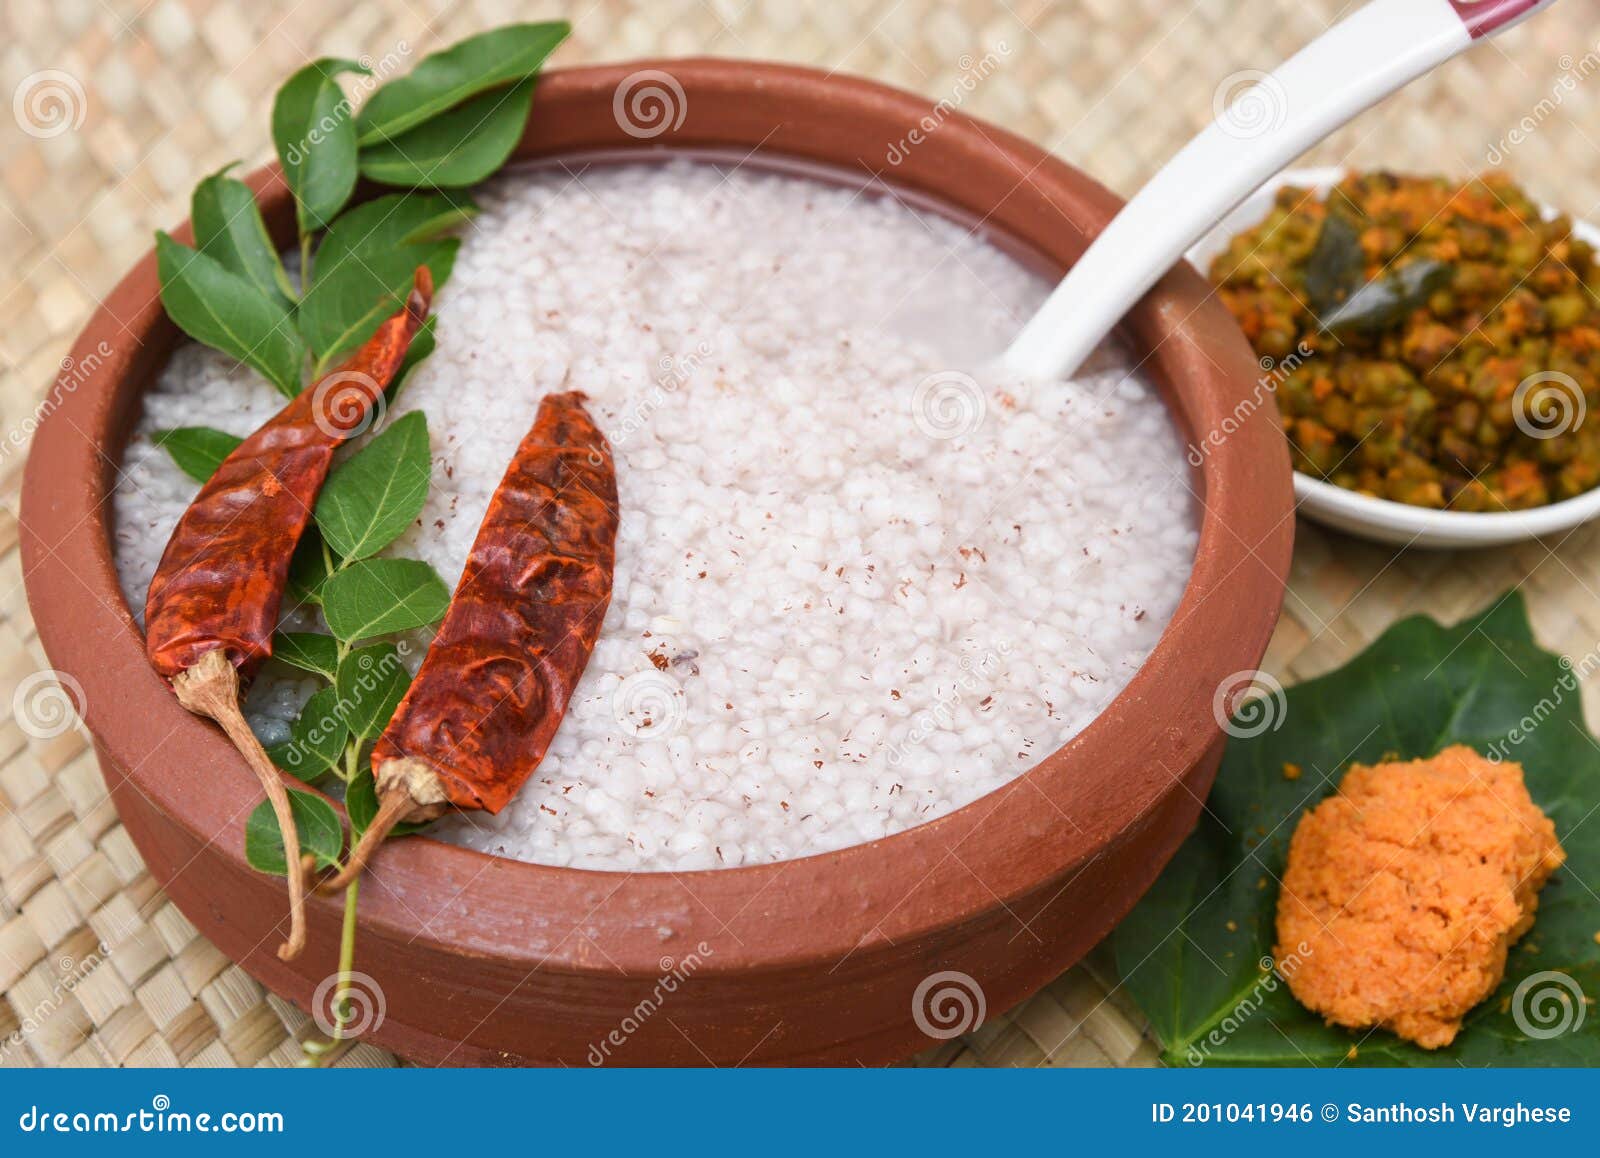 https://thumbs.dreamstime.com/z/rice-porridge-kanji-gruel-clay-pot-palm-mat-background-kerala-south-india-congee-soup-green-gram-curry-chammanthi-ayurveda-diet-201041946.jpg